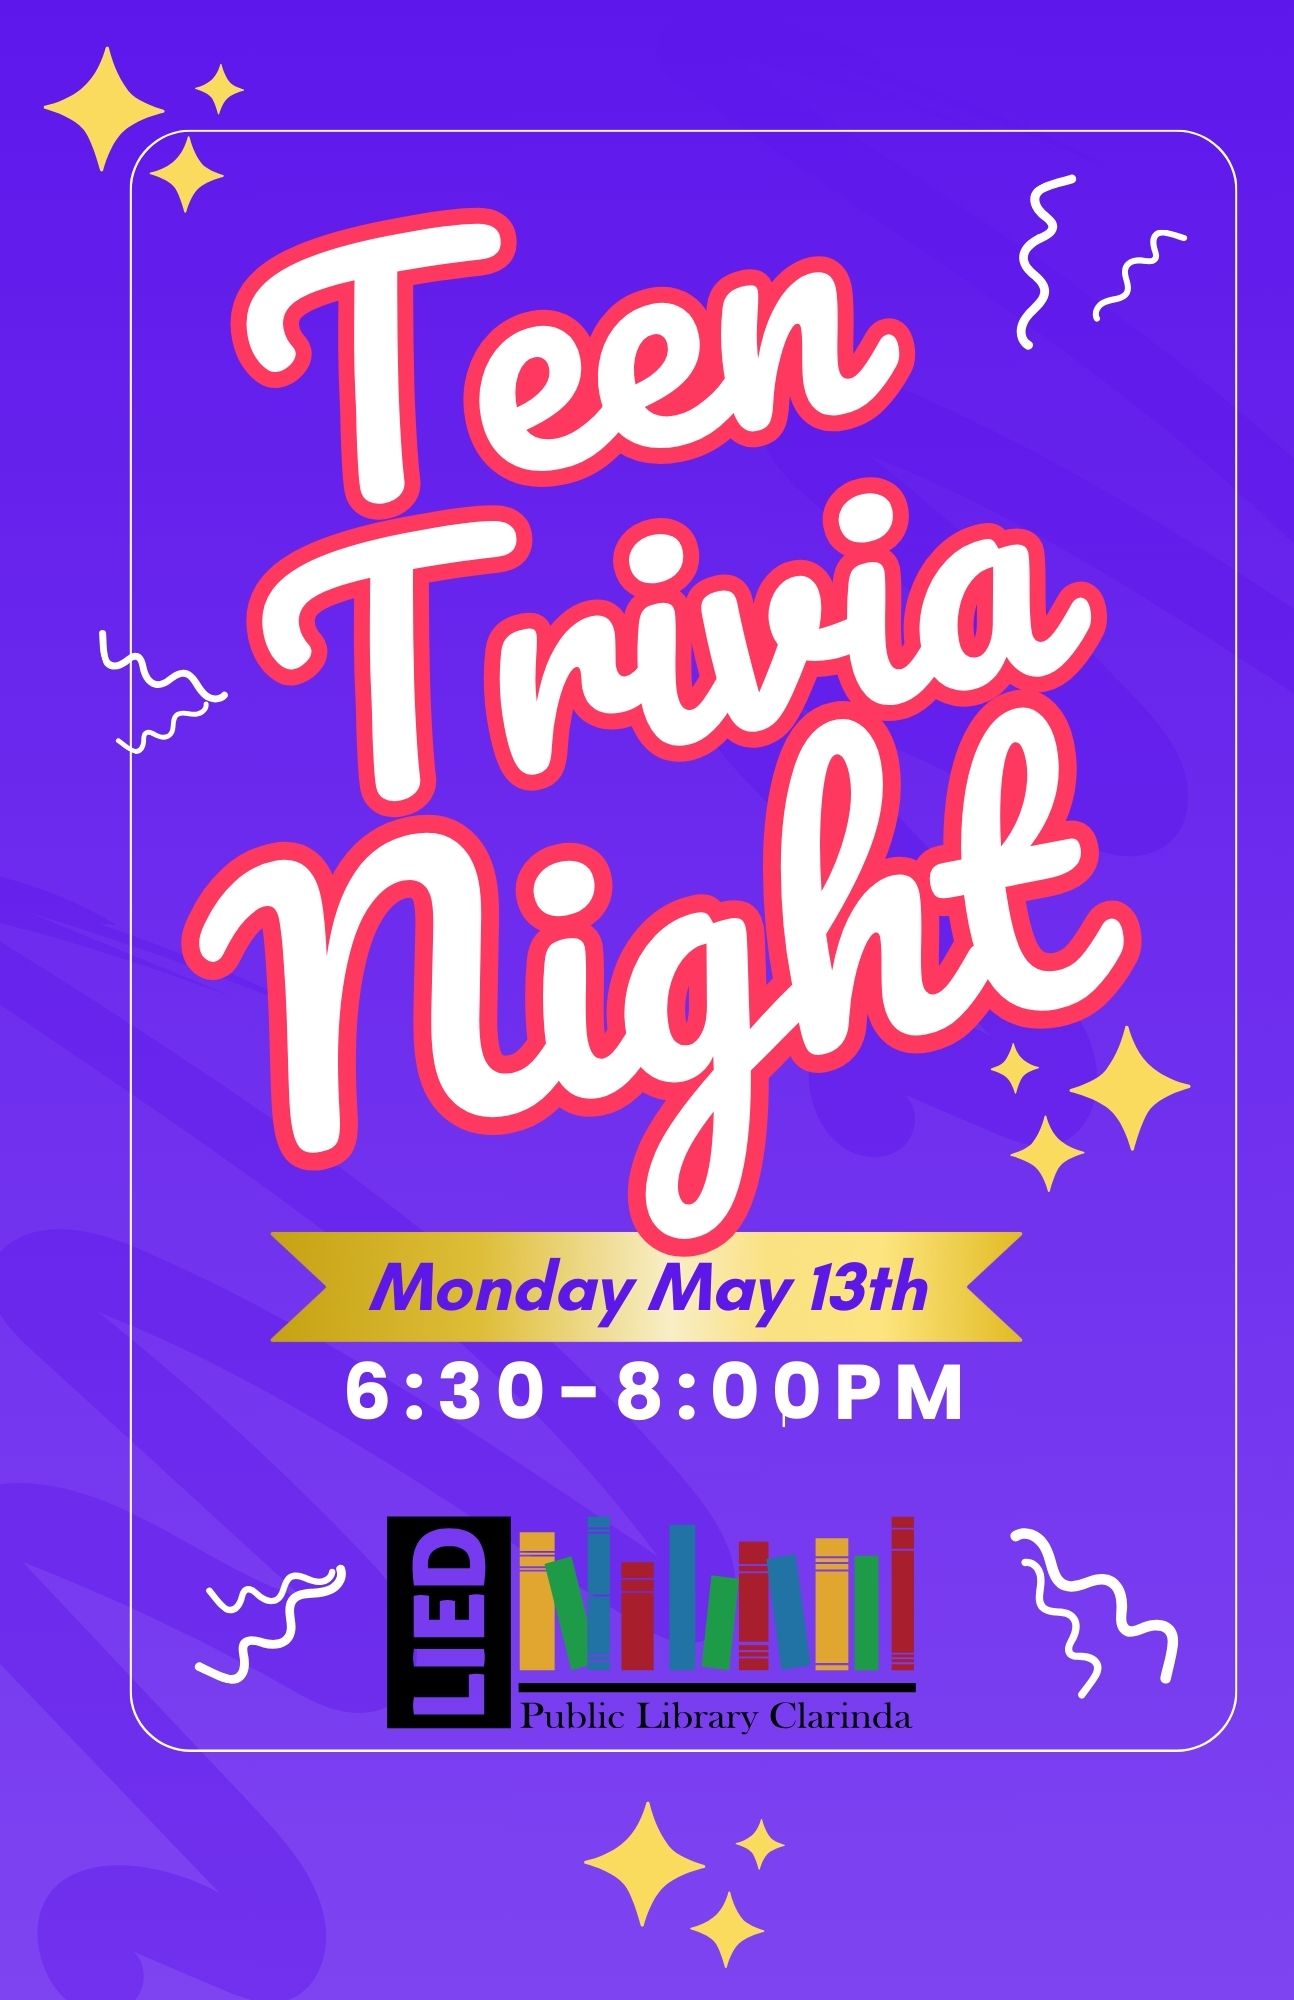 Teen Trivia Night